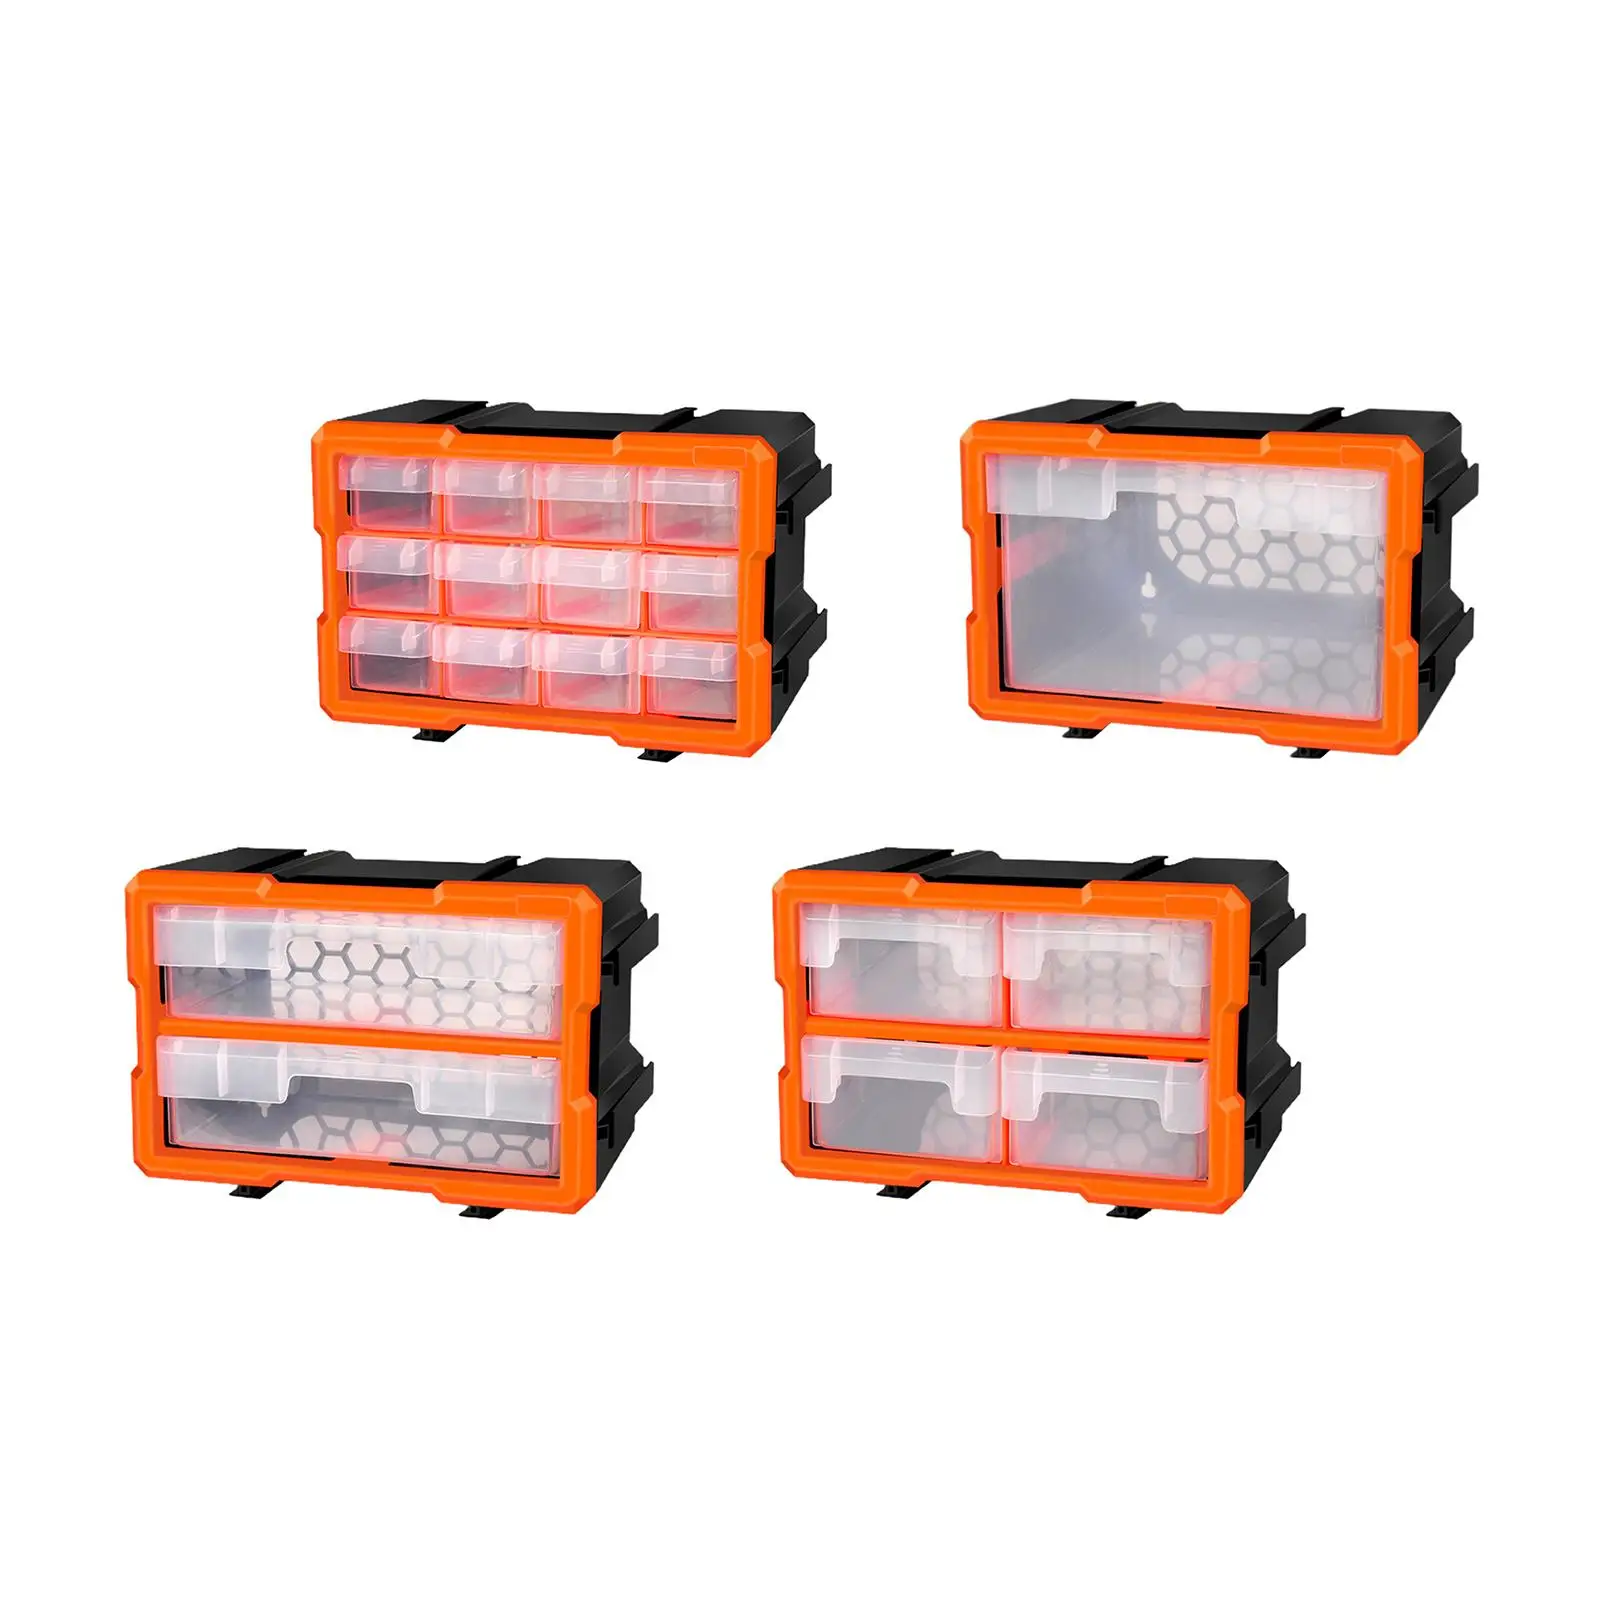 Multi Compartment Hardware and Crafts Portable Organizer Storage Case